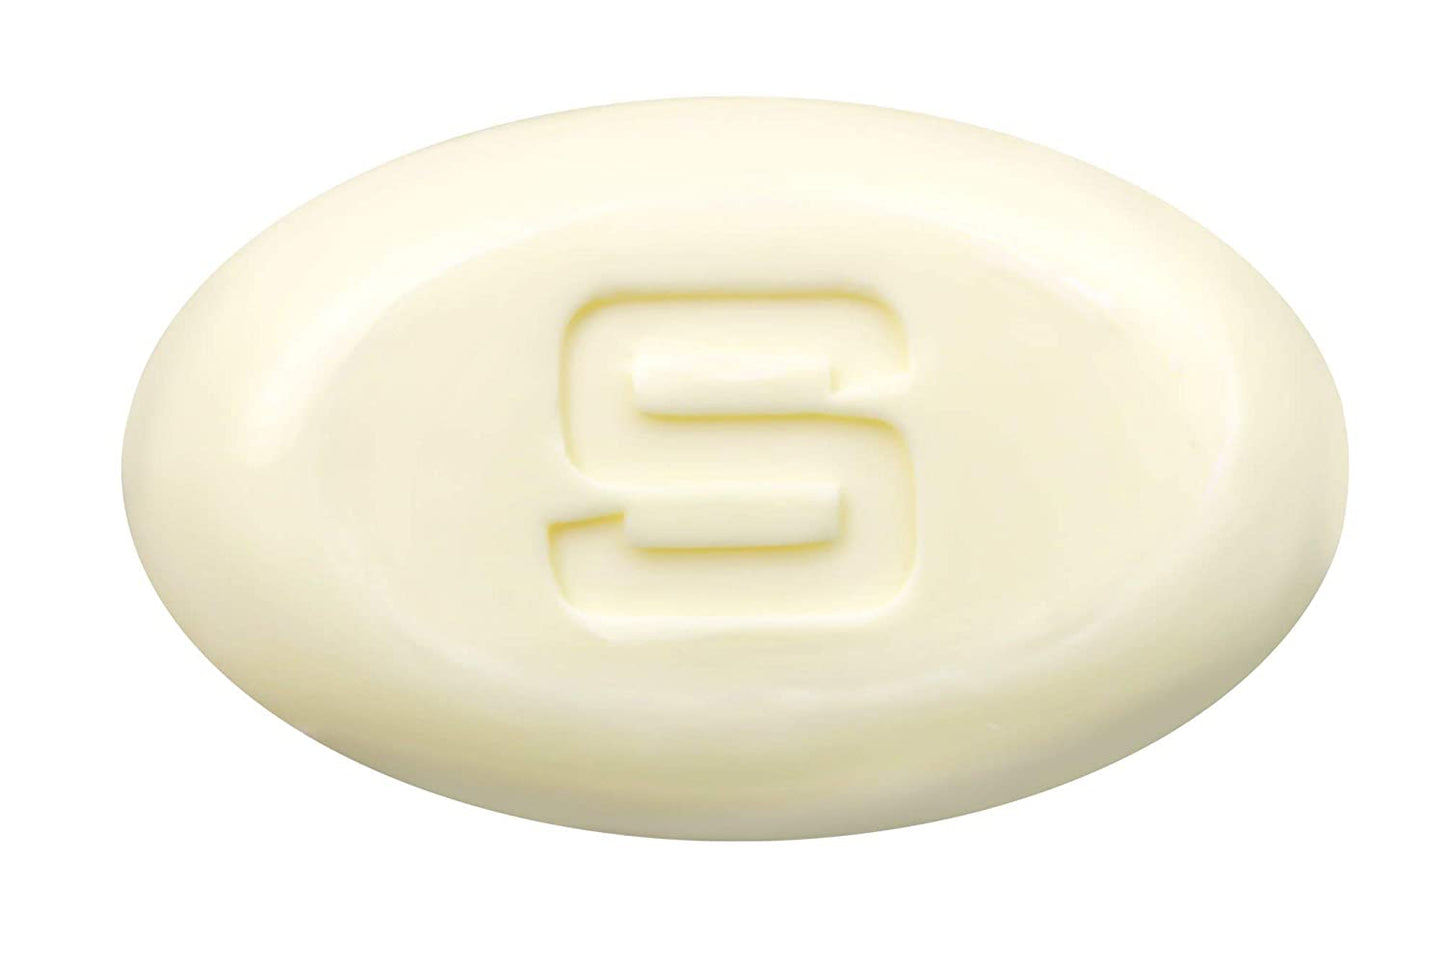 Sulphur Soap - Premium 10% Sulfur Advanced Wash